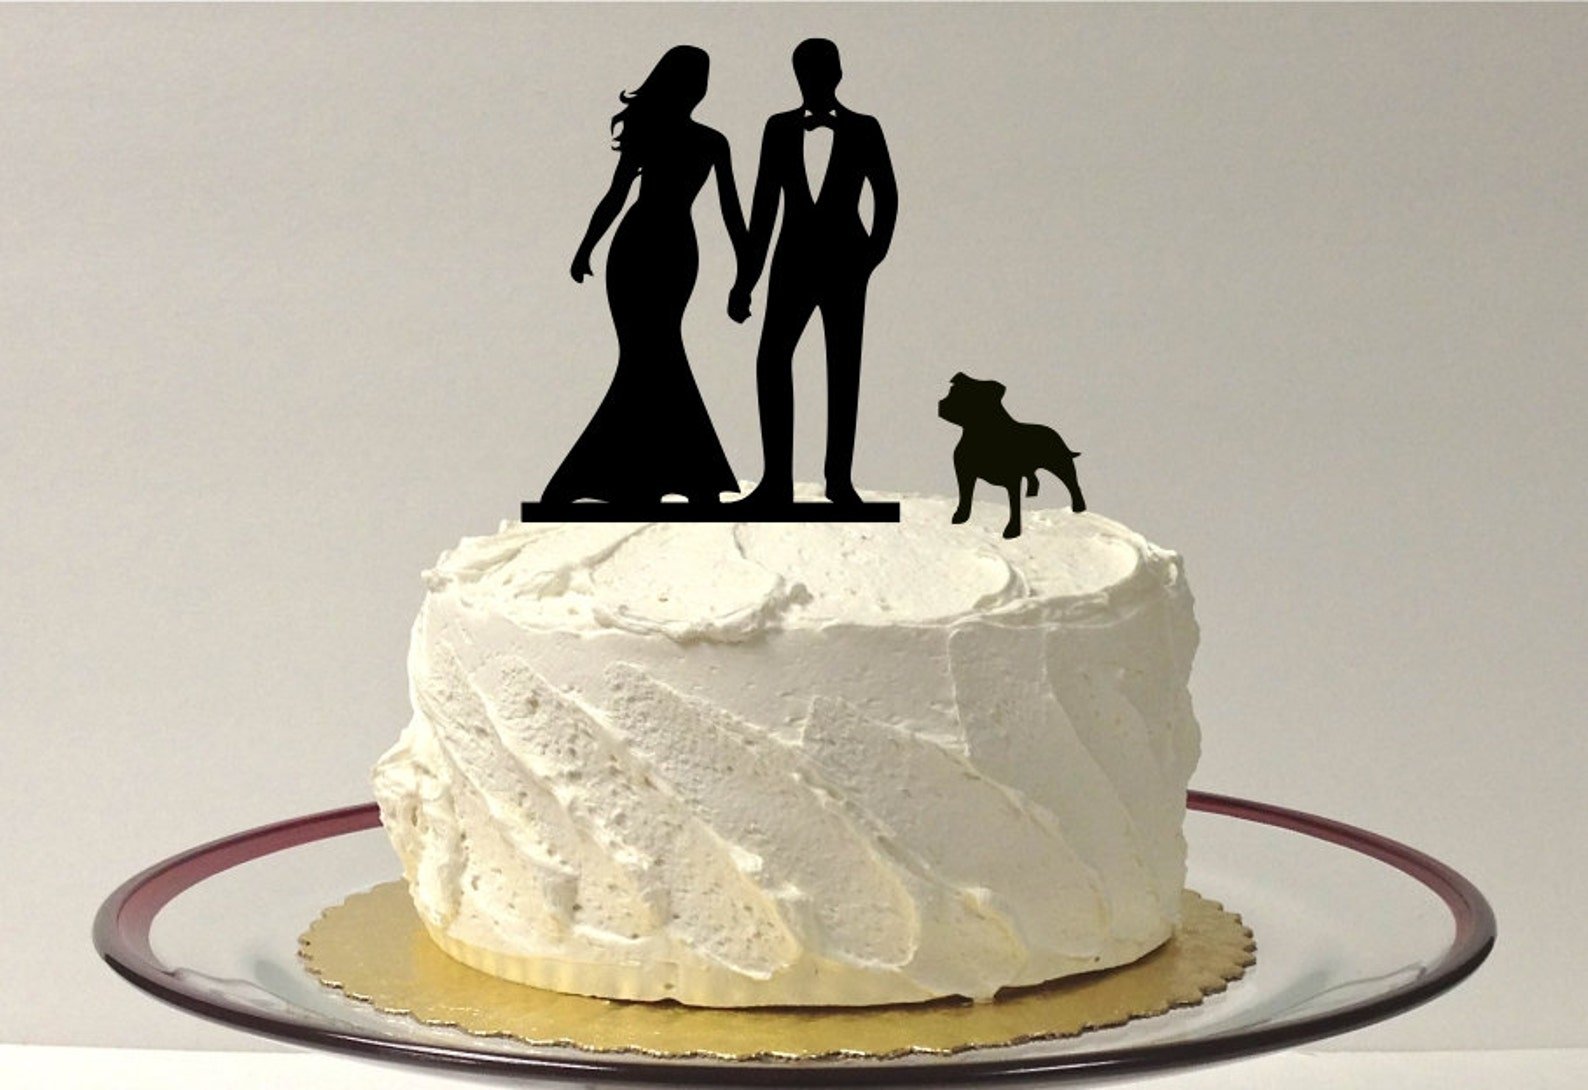 Жених невеста на торт. Фигурки на свадебный торт. Фигуры на свадебный торт. Статуэтка на свадебный торт. Фигурки жениха и невесты на торт.